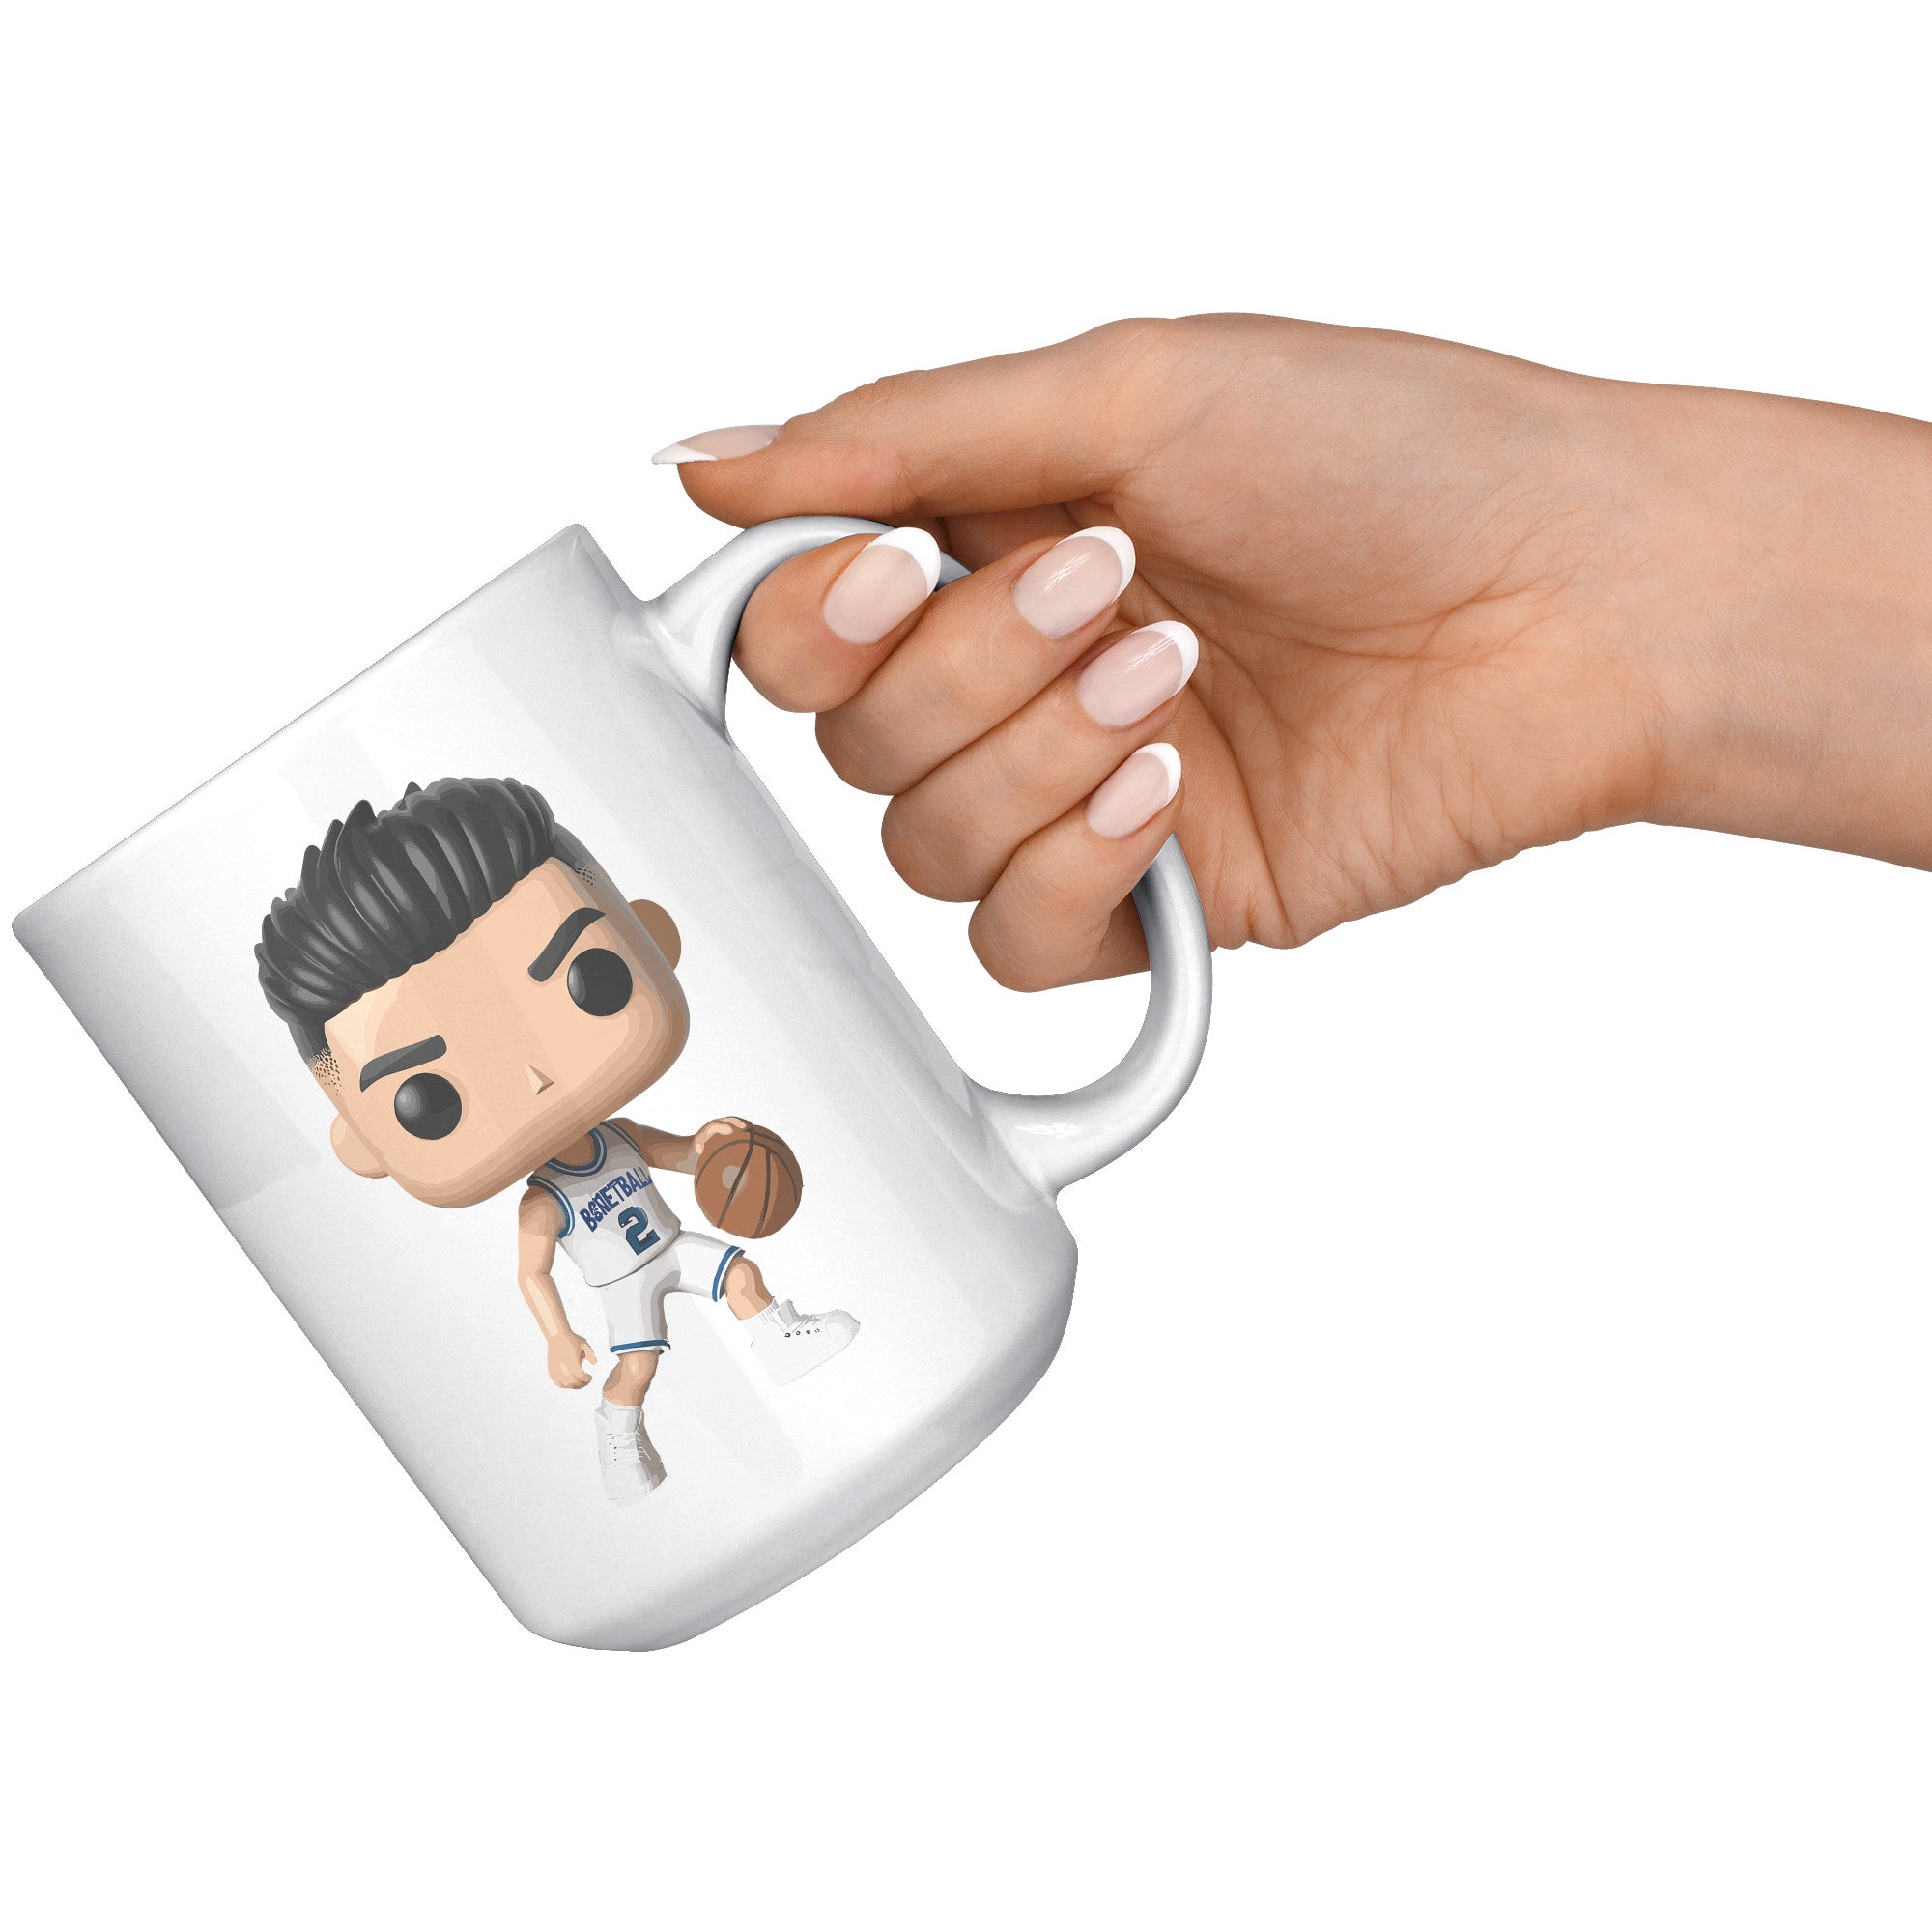 "Slam Dunk Basketball Coffee Mug - Hoops Enthusiast Cup- Perfect Gift for Basketball Players & Fans - Court-Ready Style Coffee Mug" - J1